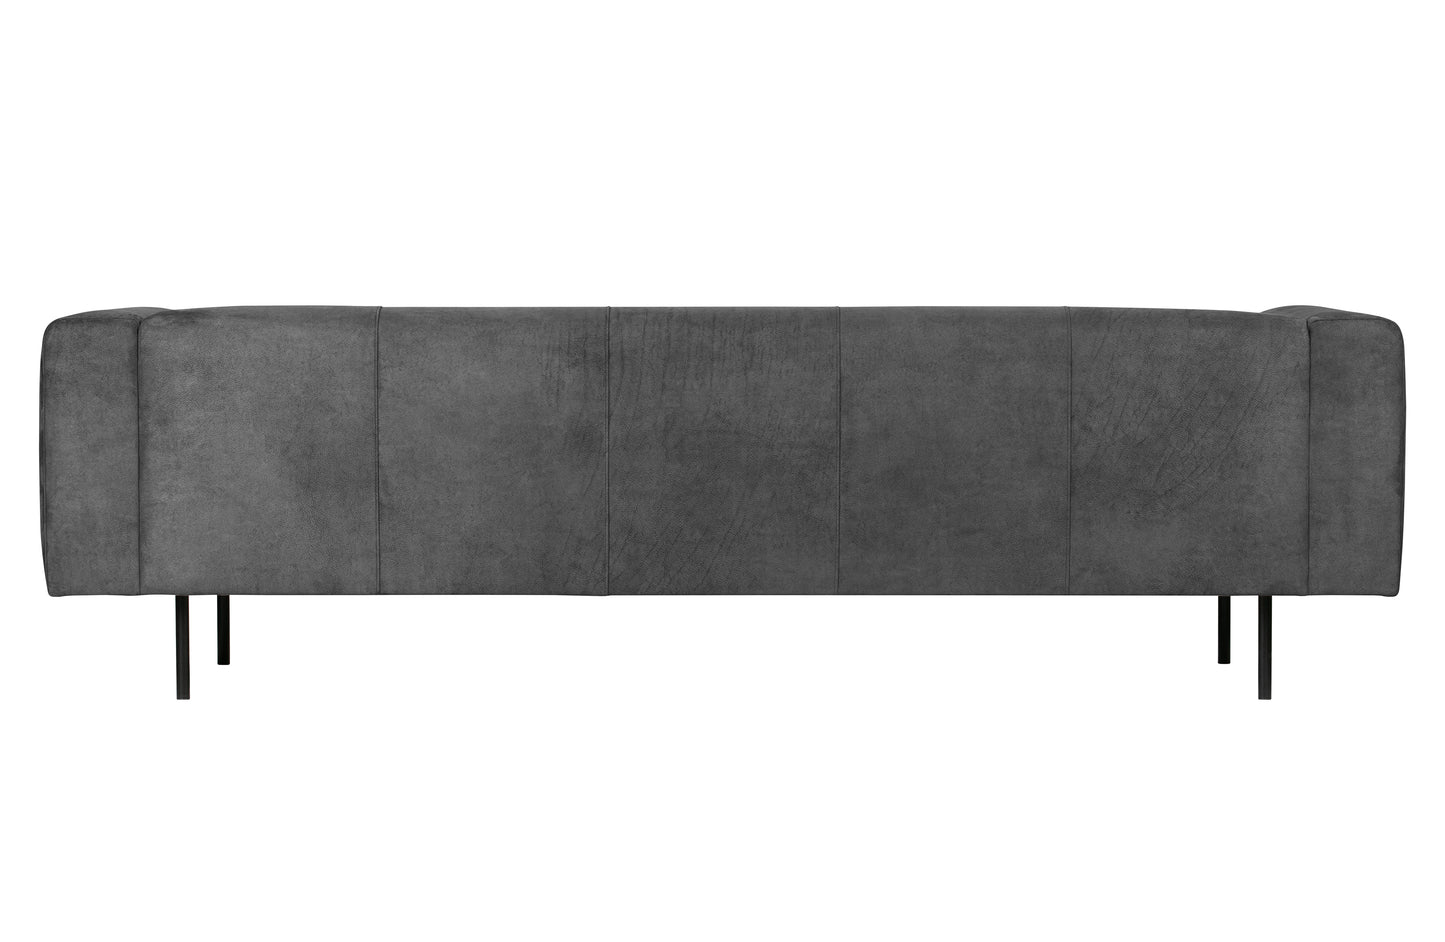 die vtwon | Skin - 4-Personen-Sofa, 250 cm Skin Dunkelgrau